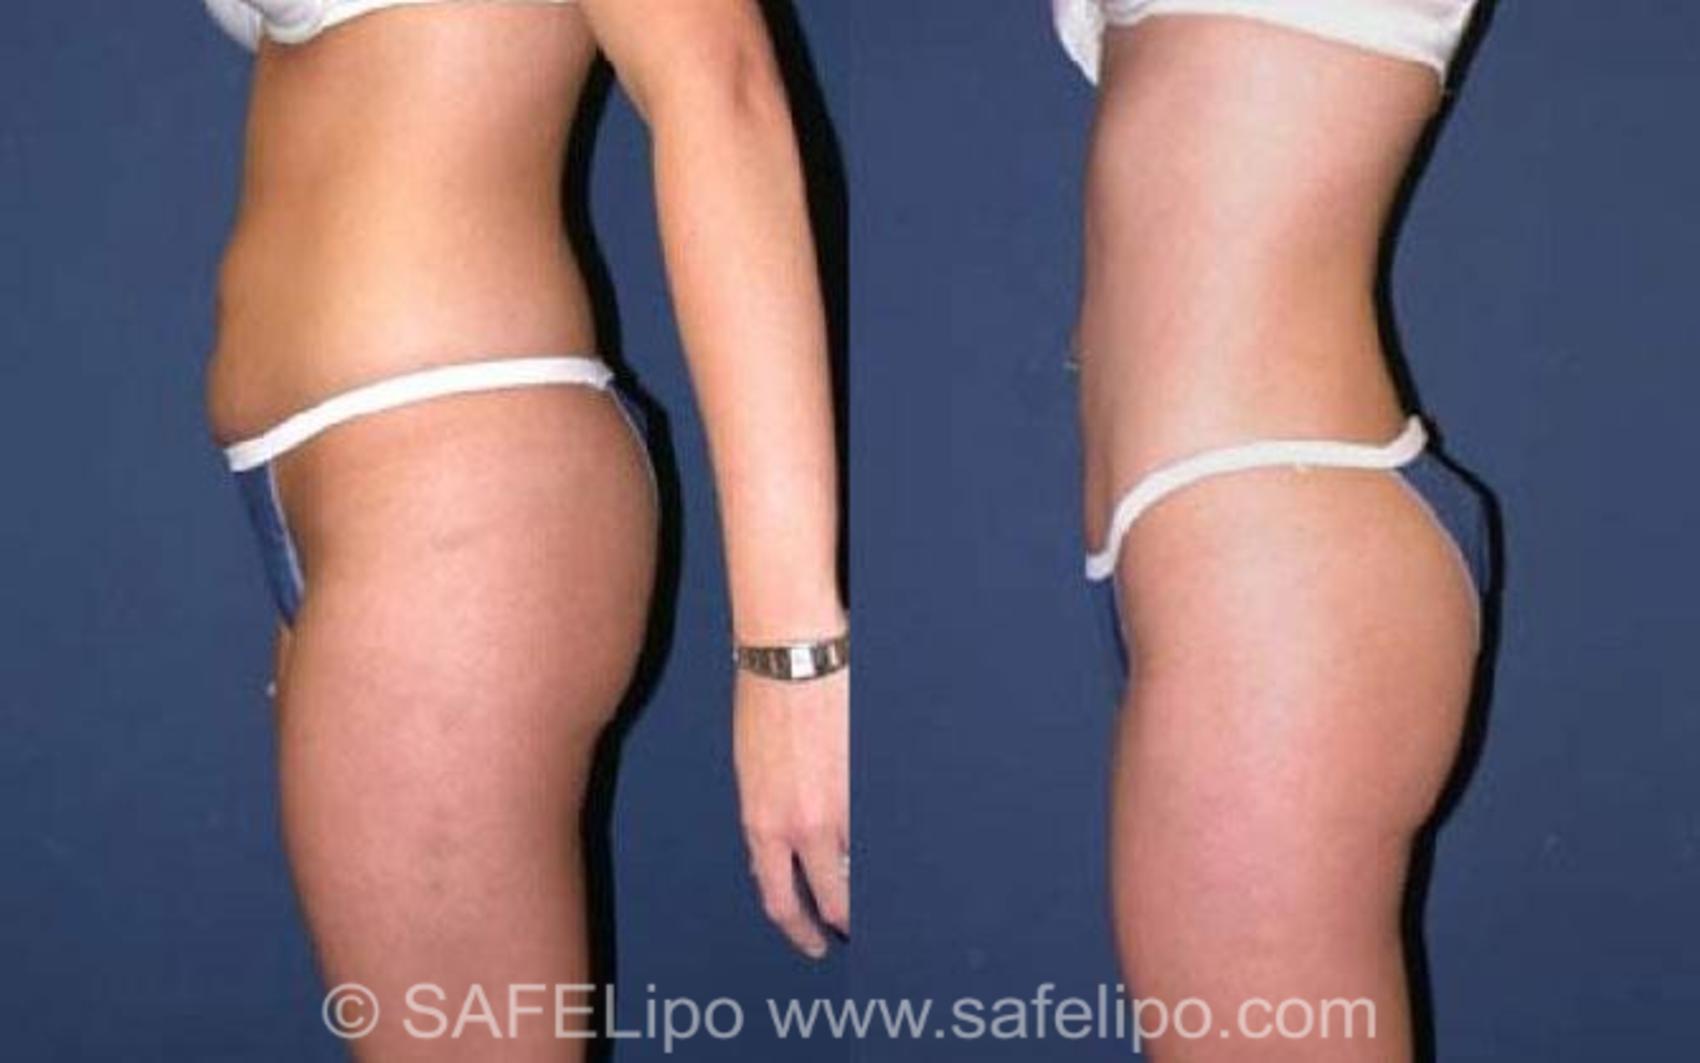 SAFELipoHD® Case 76 Before & After View #3 | SAFELipo®